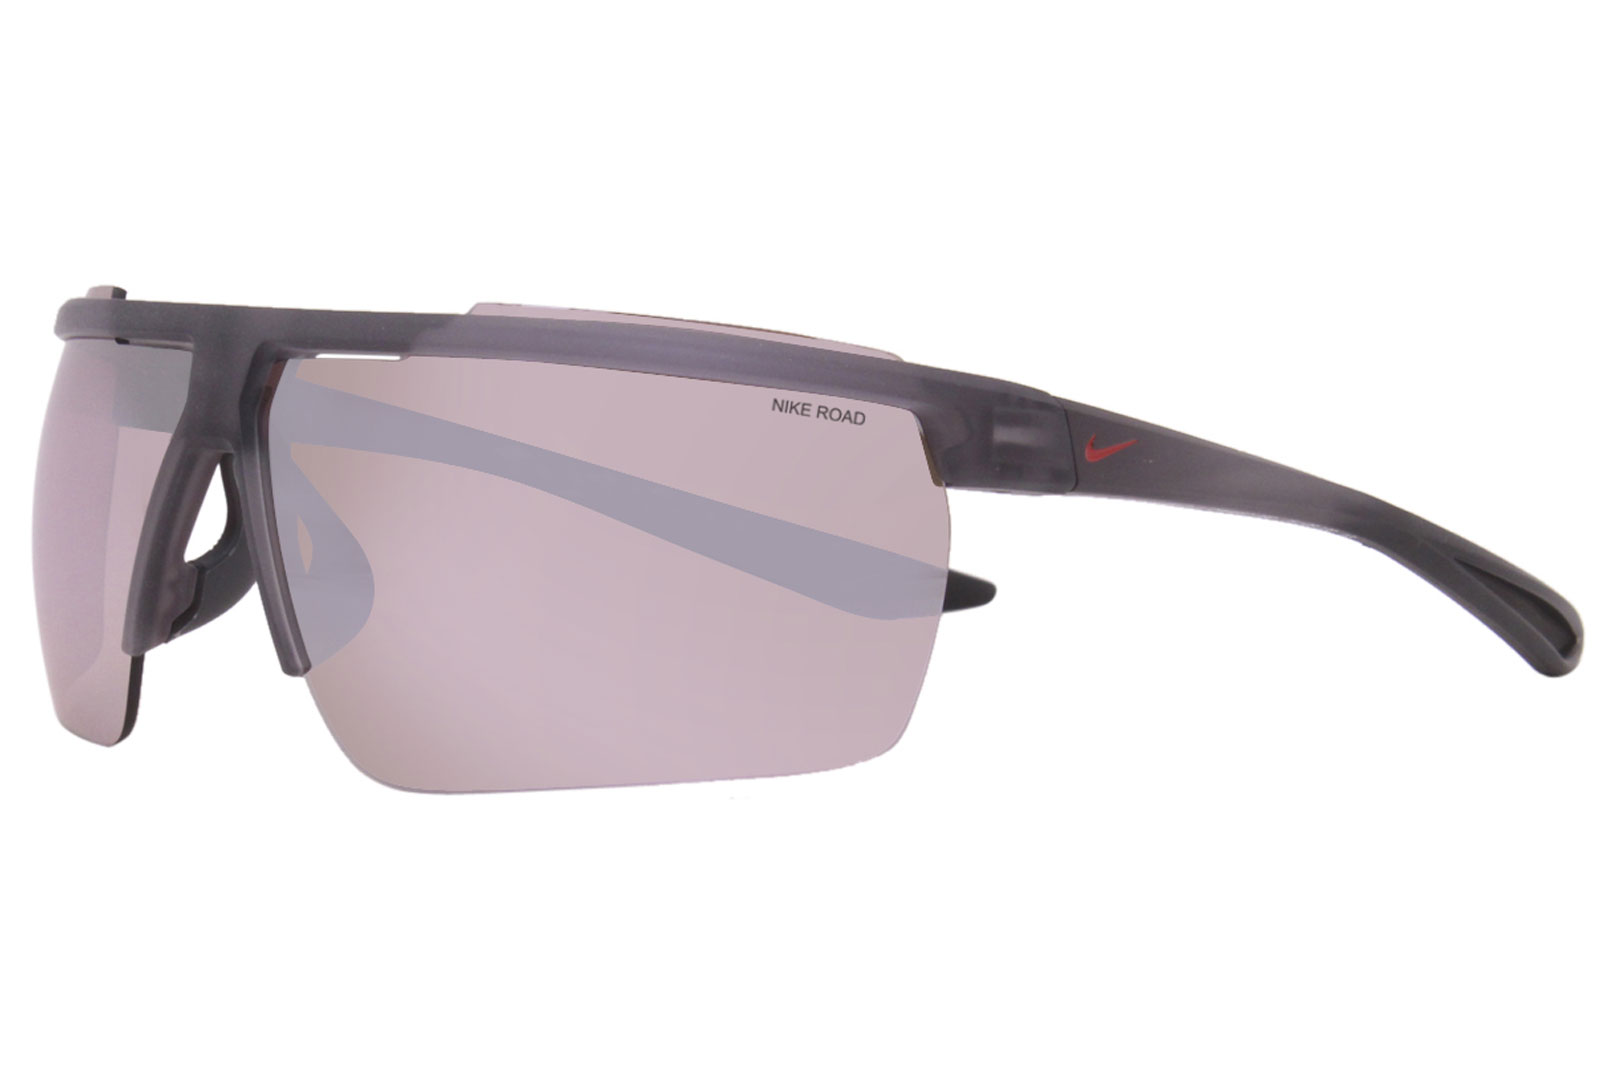 Nike Sunglasses Windshield E Cw4662 080, Dark Grey Mirrored Tint Sunglasses